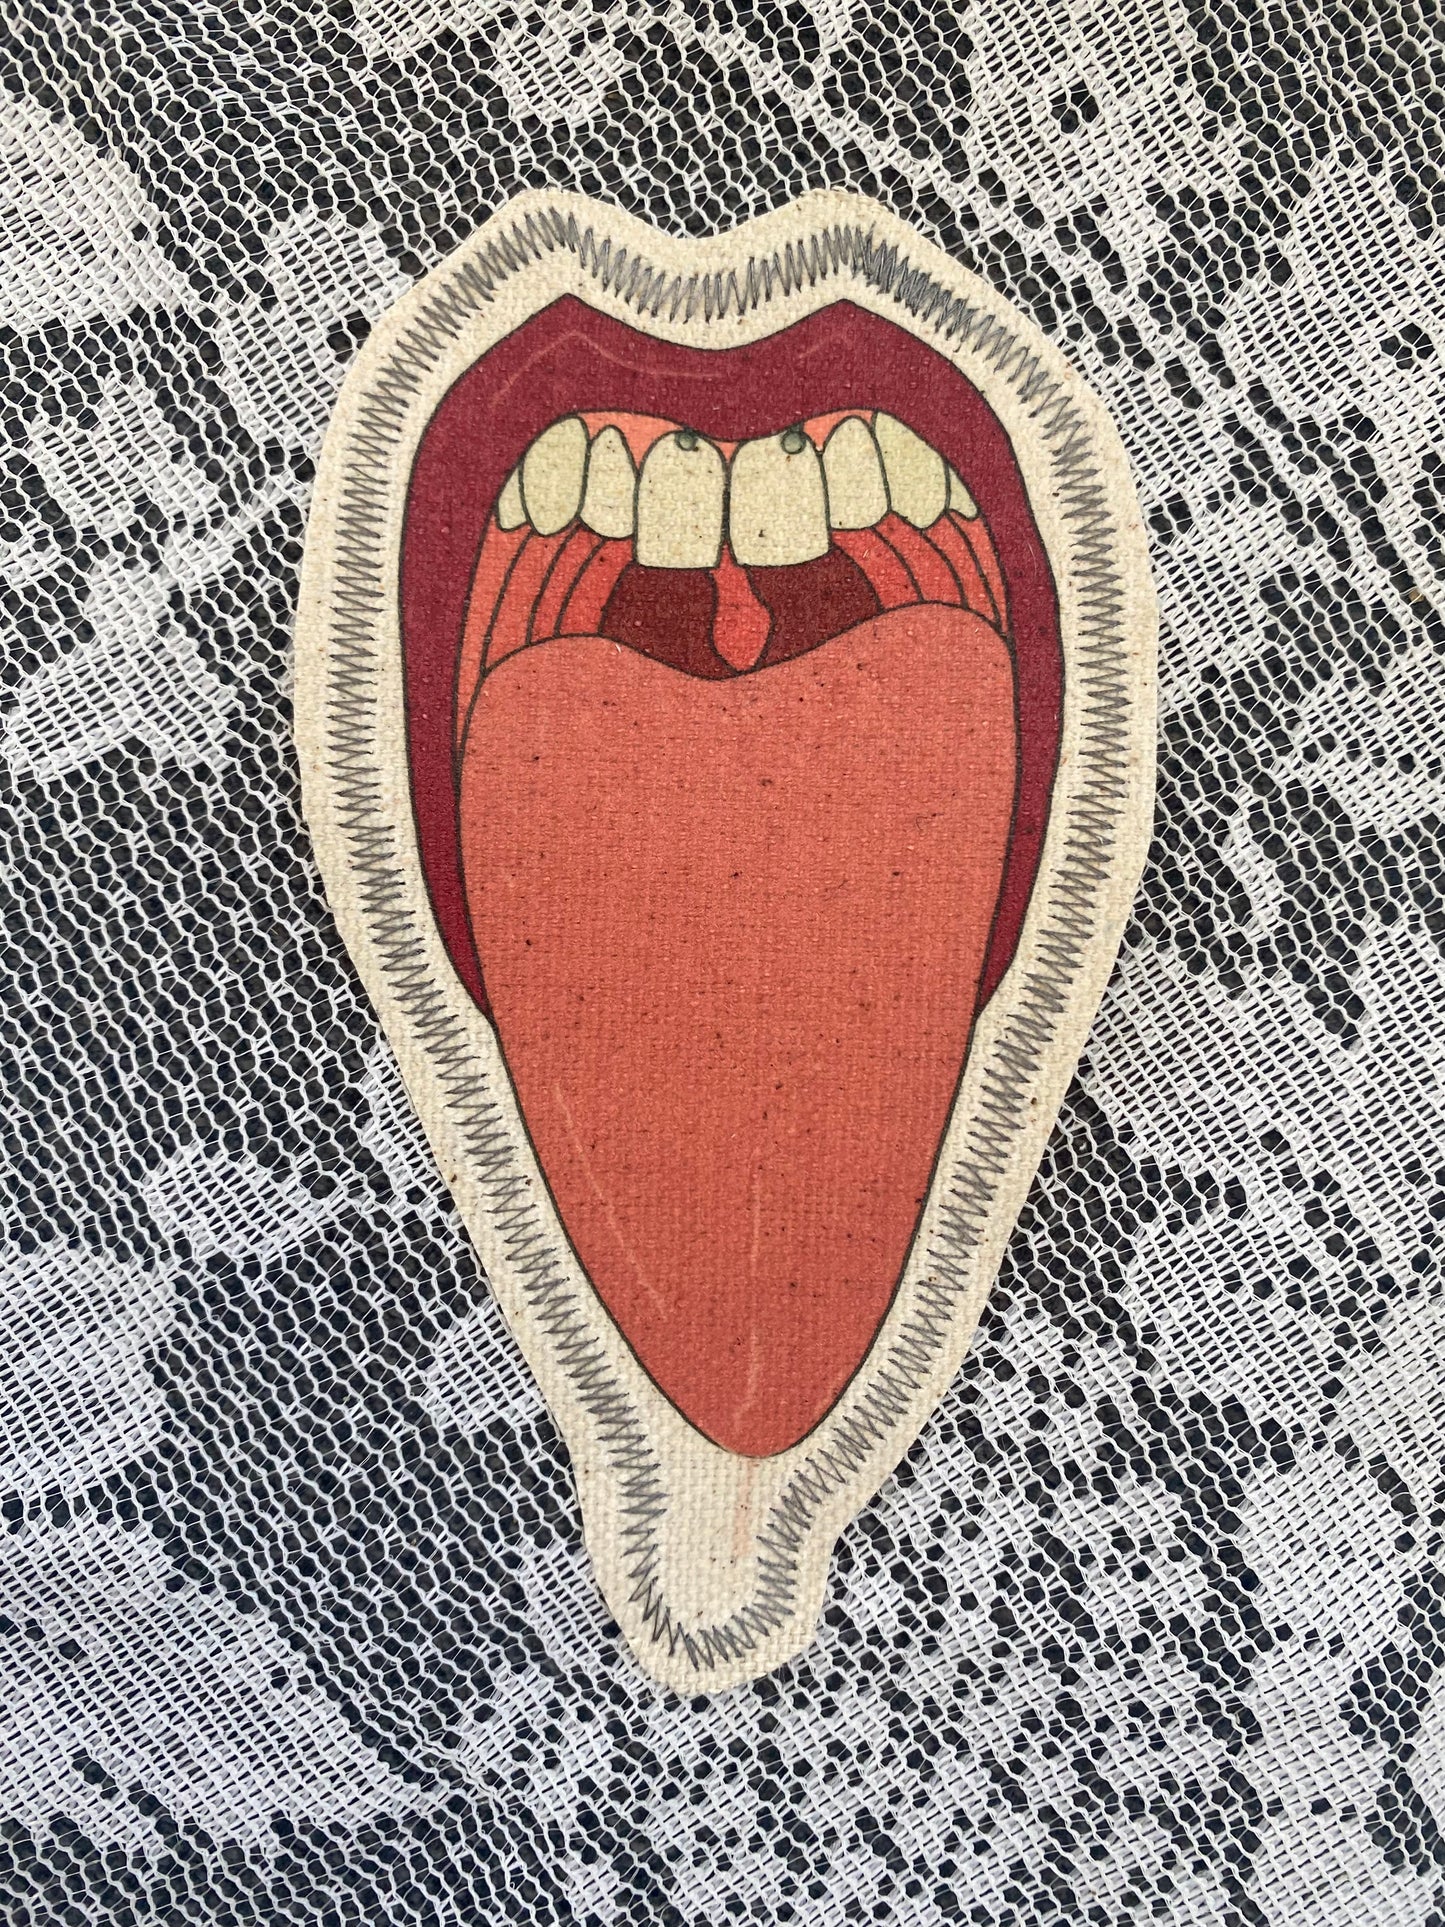 Loud Mouth canvas patch